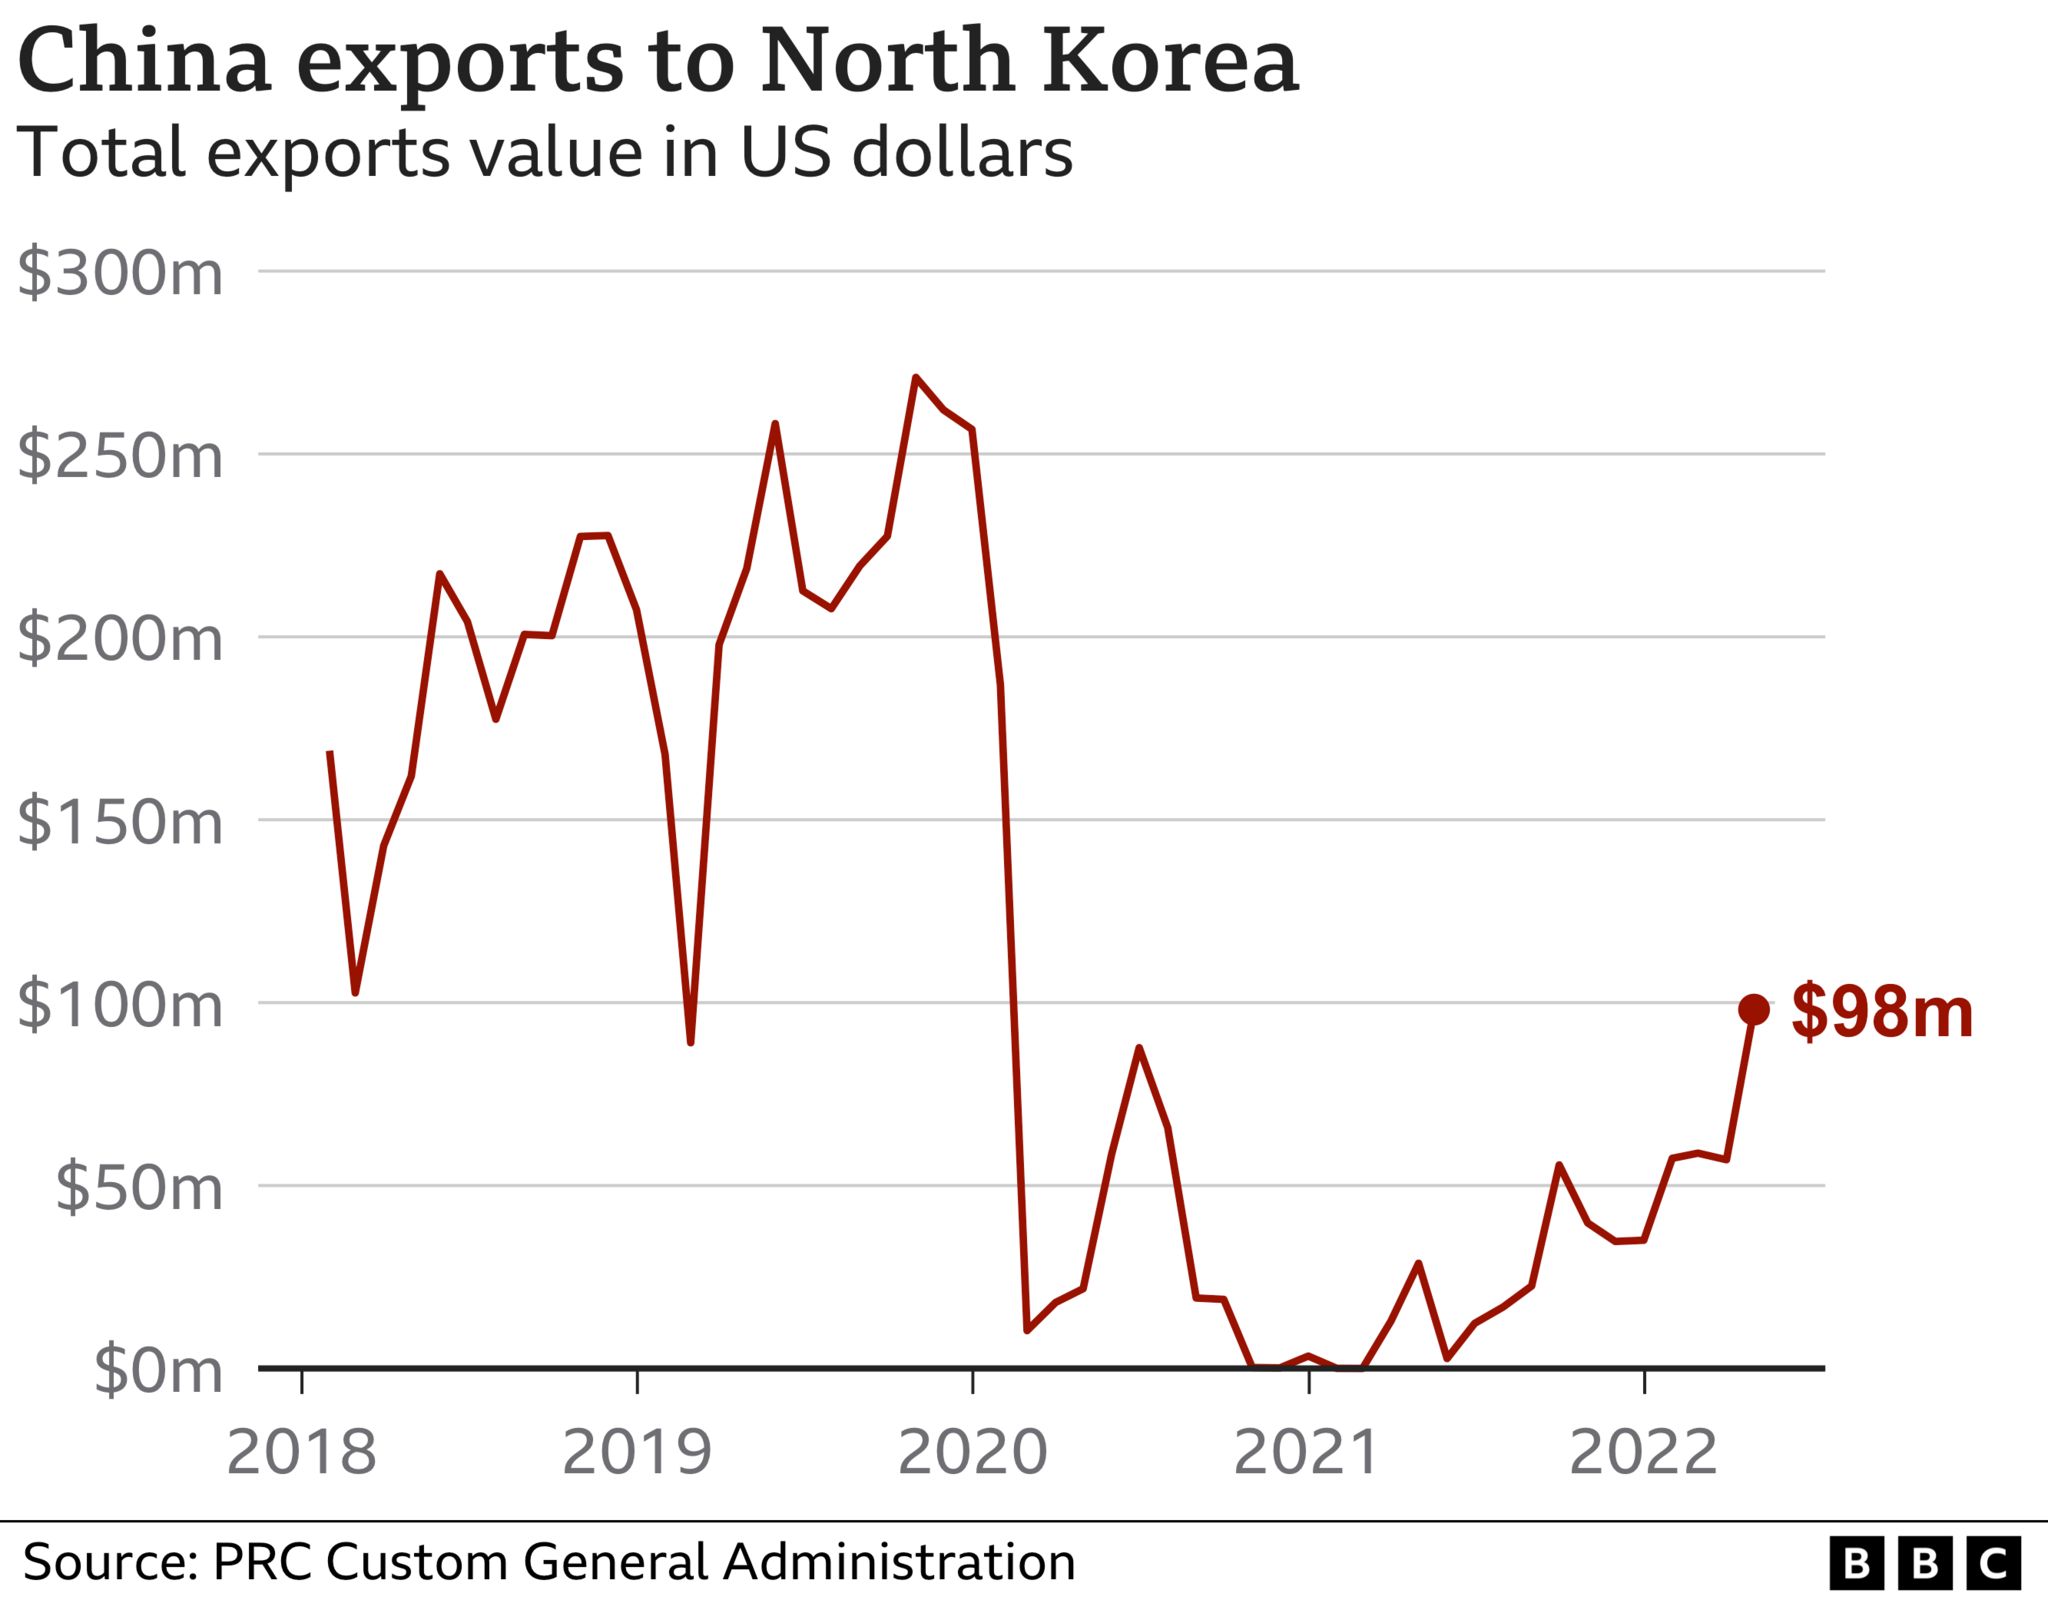 China-North Korea trade